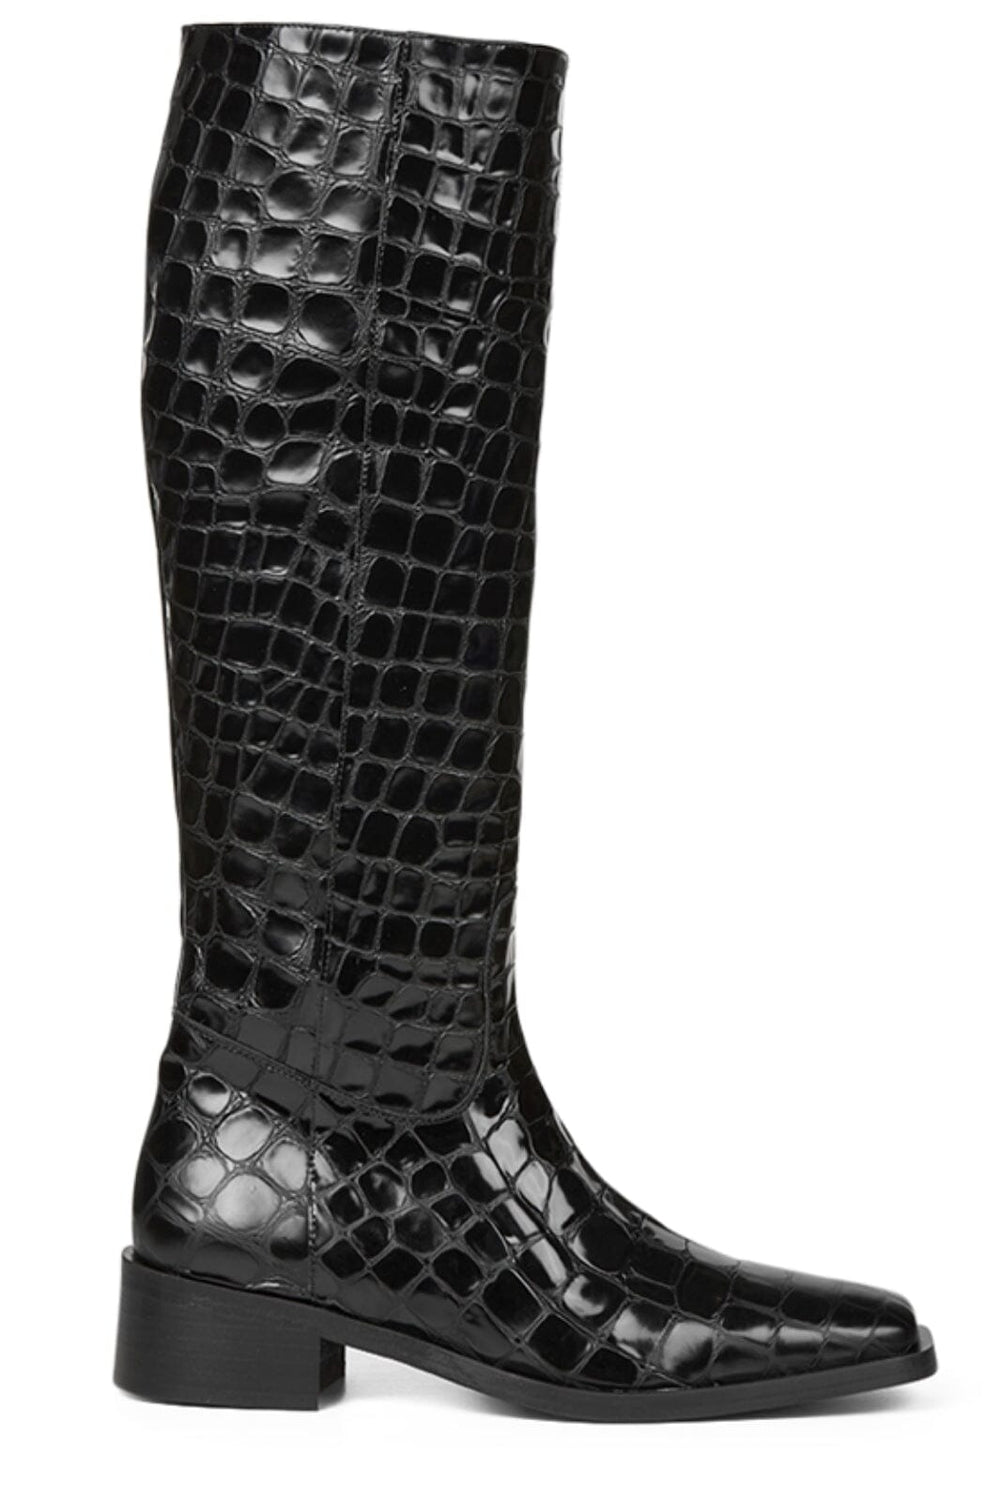 Angulus - High-leg boot with zipper - 1674 Black Croco Støvler 